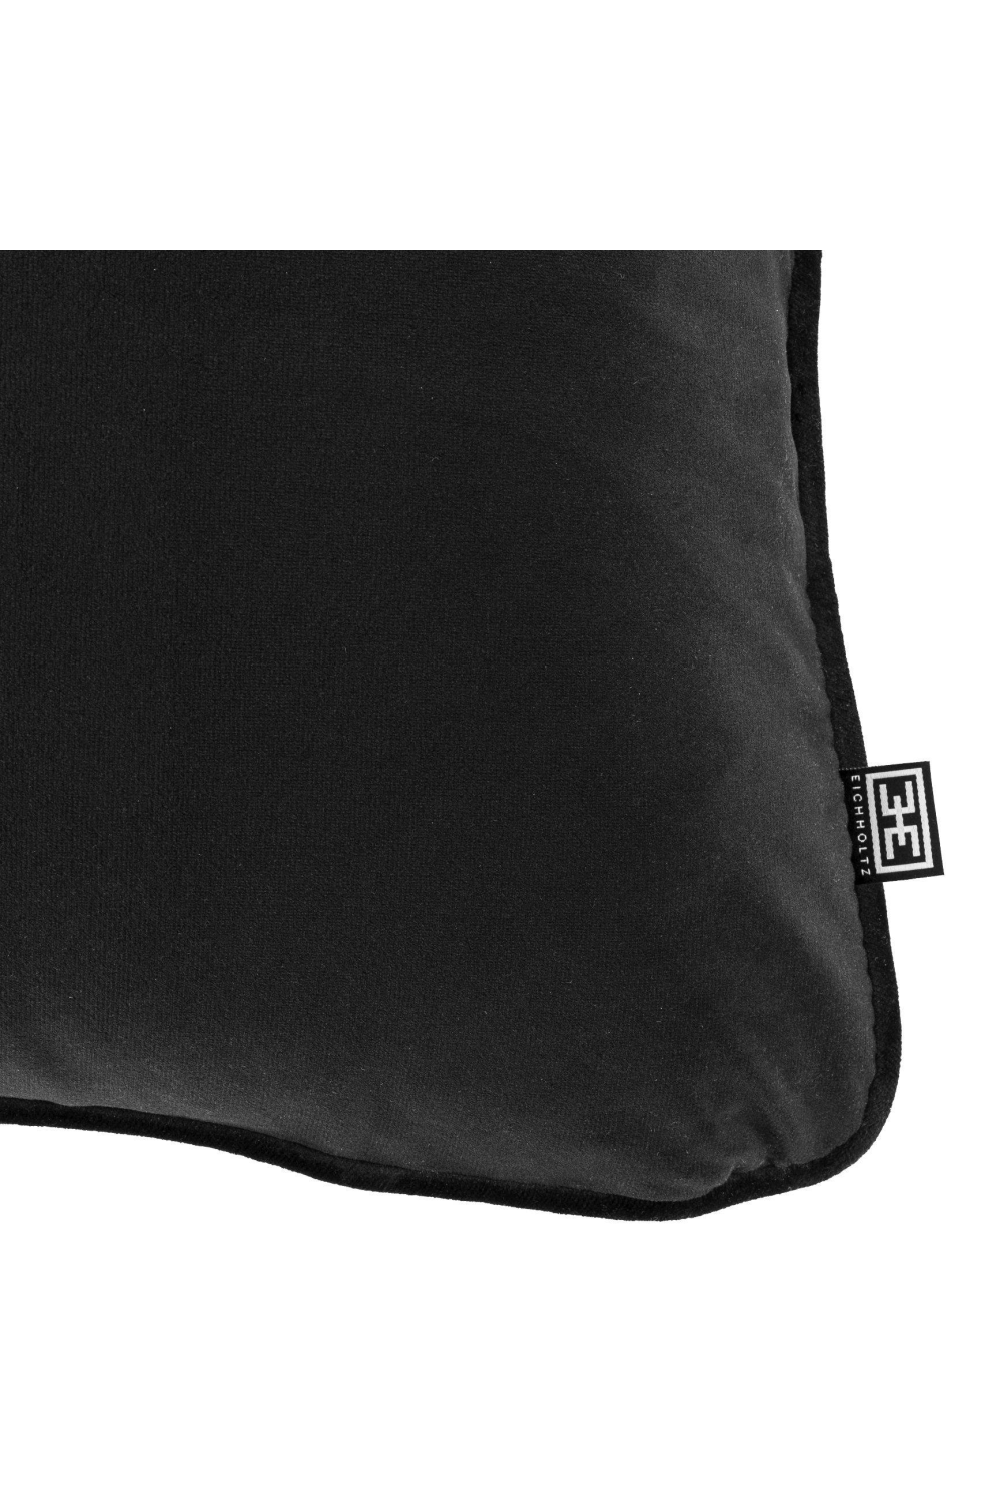 Black Square Pillow | Eichholtz Roche | OROA